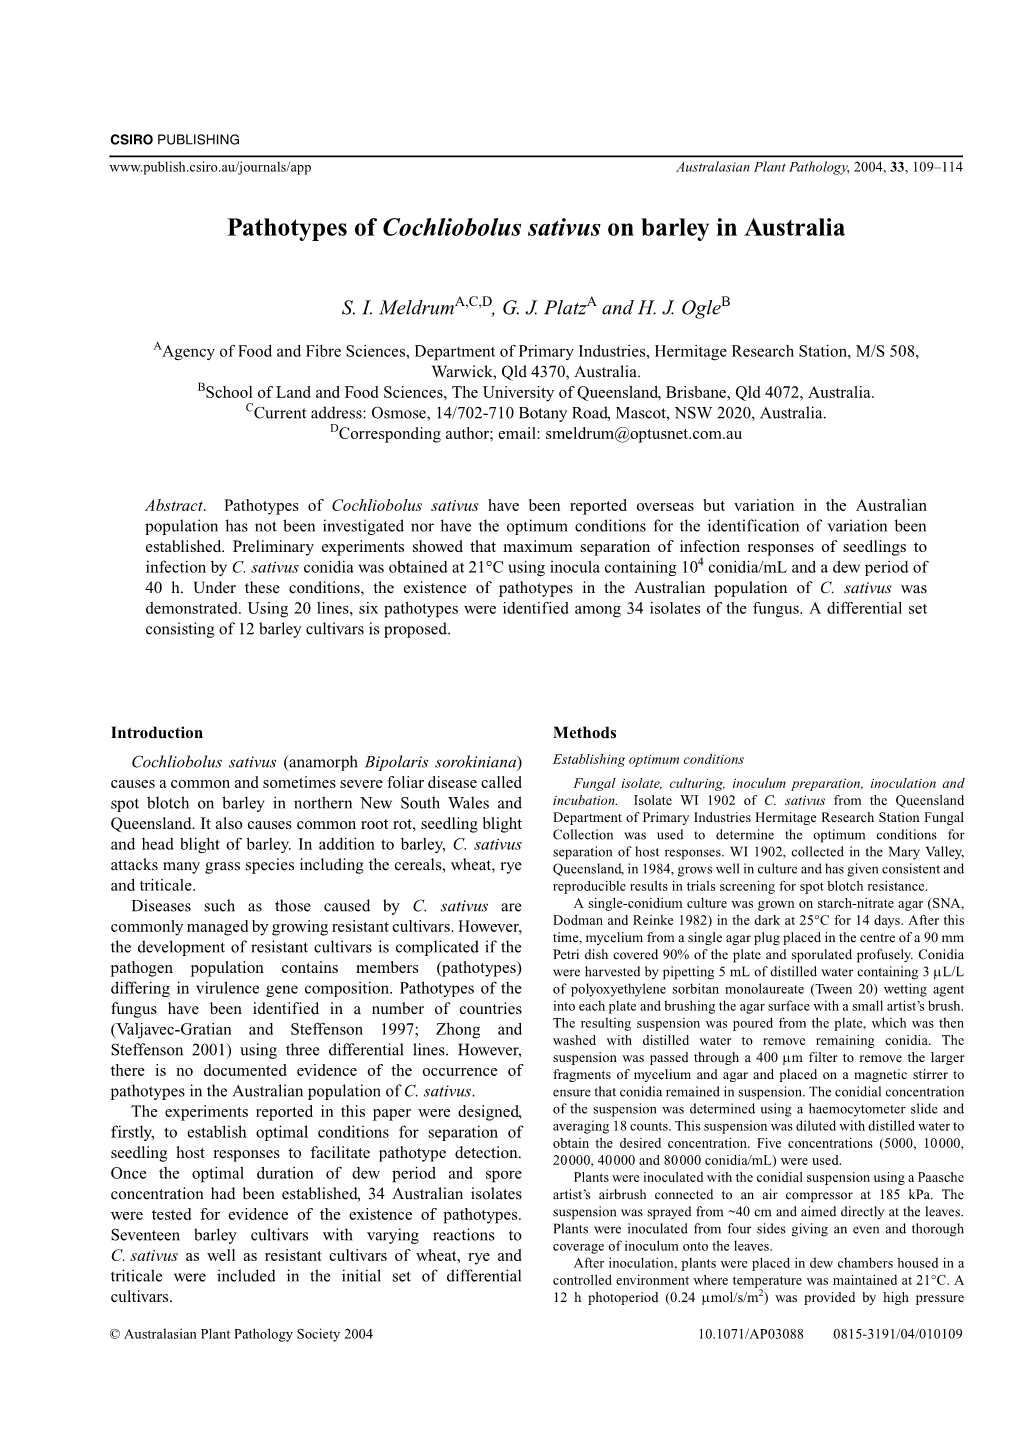 Pathotypes of Cochliobolus Sativus on Barley in Australia